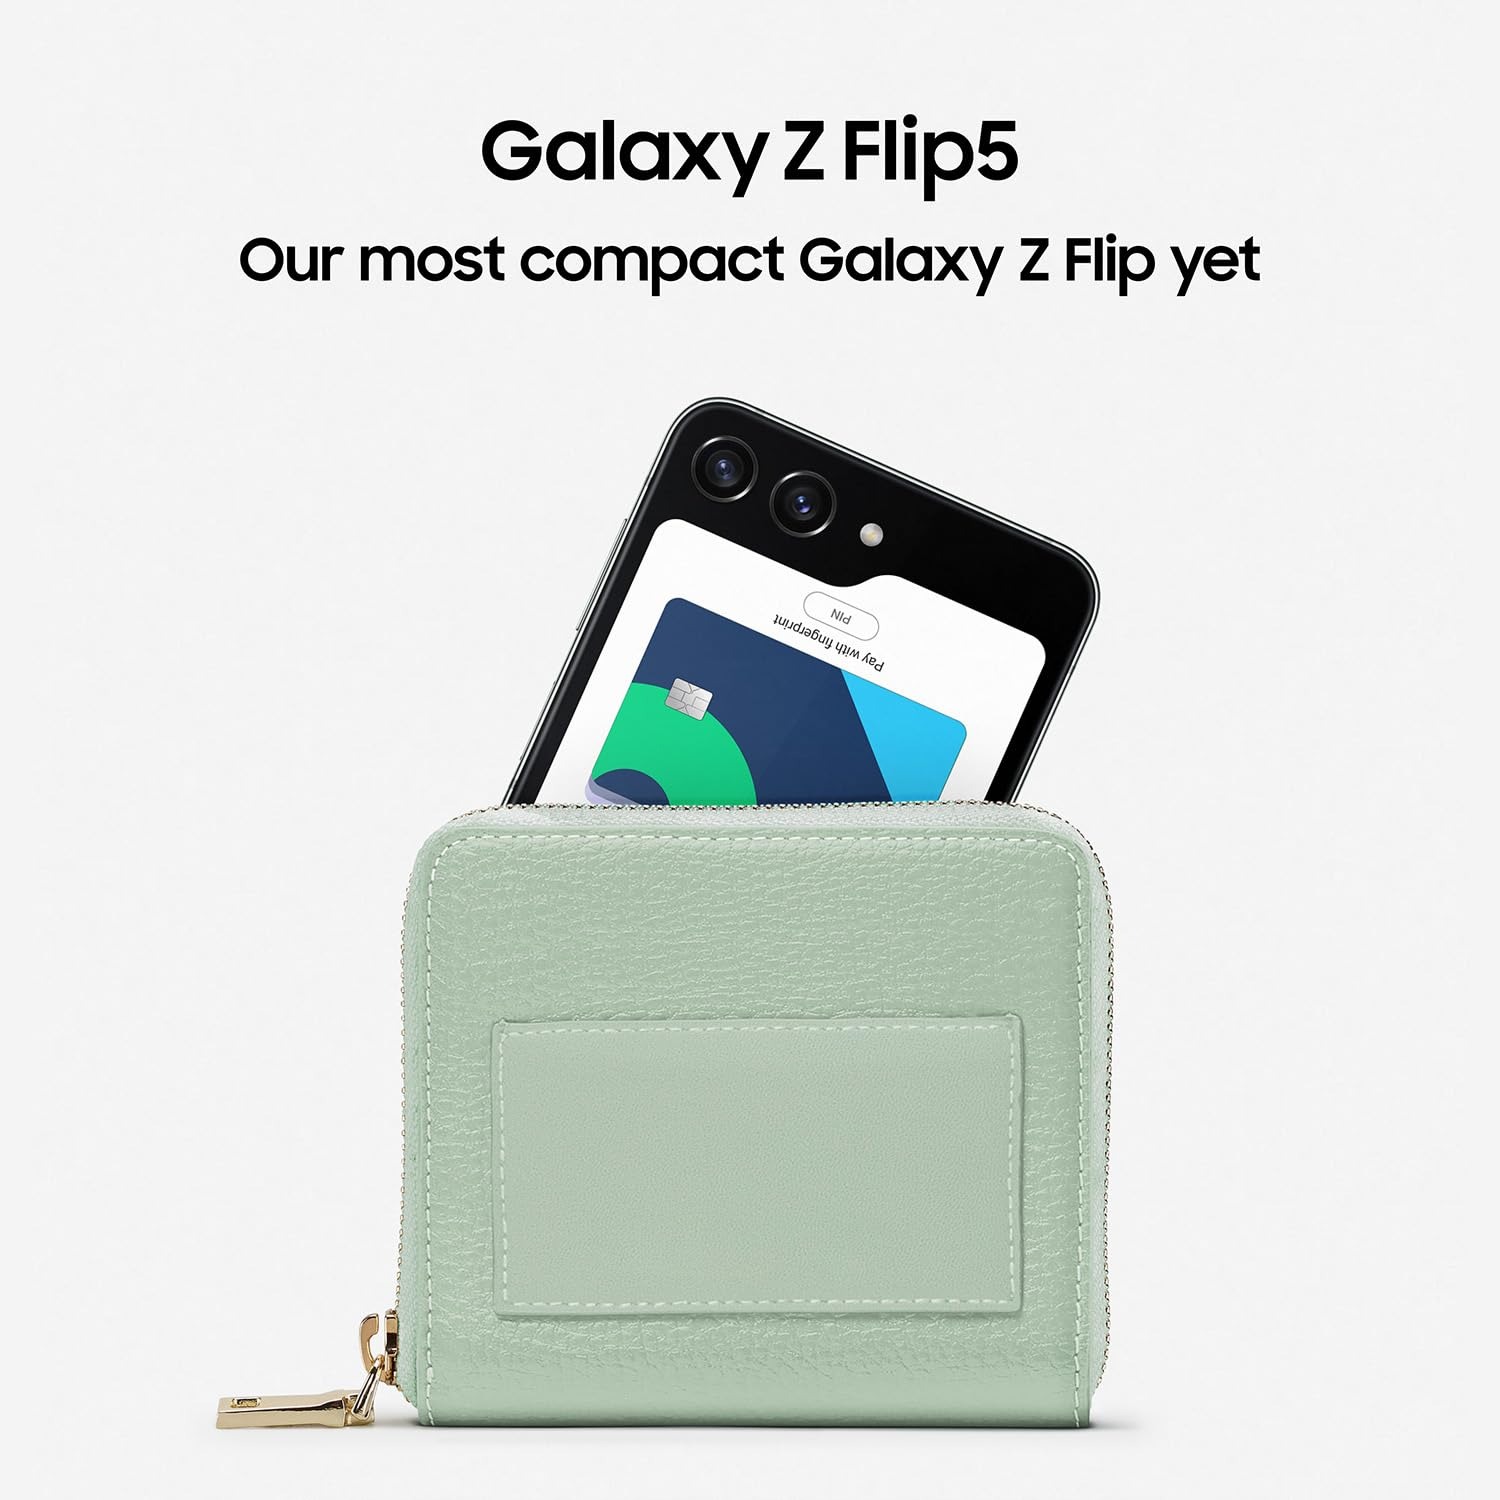 Samsung Galaxy Z Flip5 5G (Graphite, 8GB RAM, 256GB Storage) - graphite, 8GB-256GB